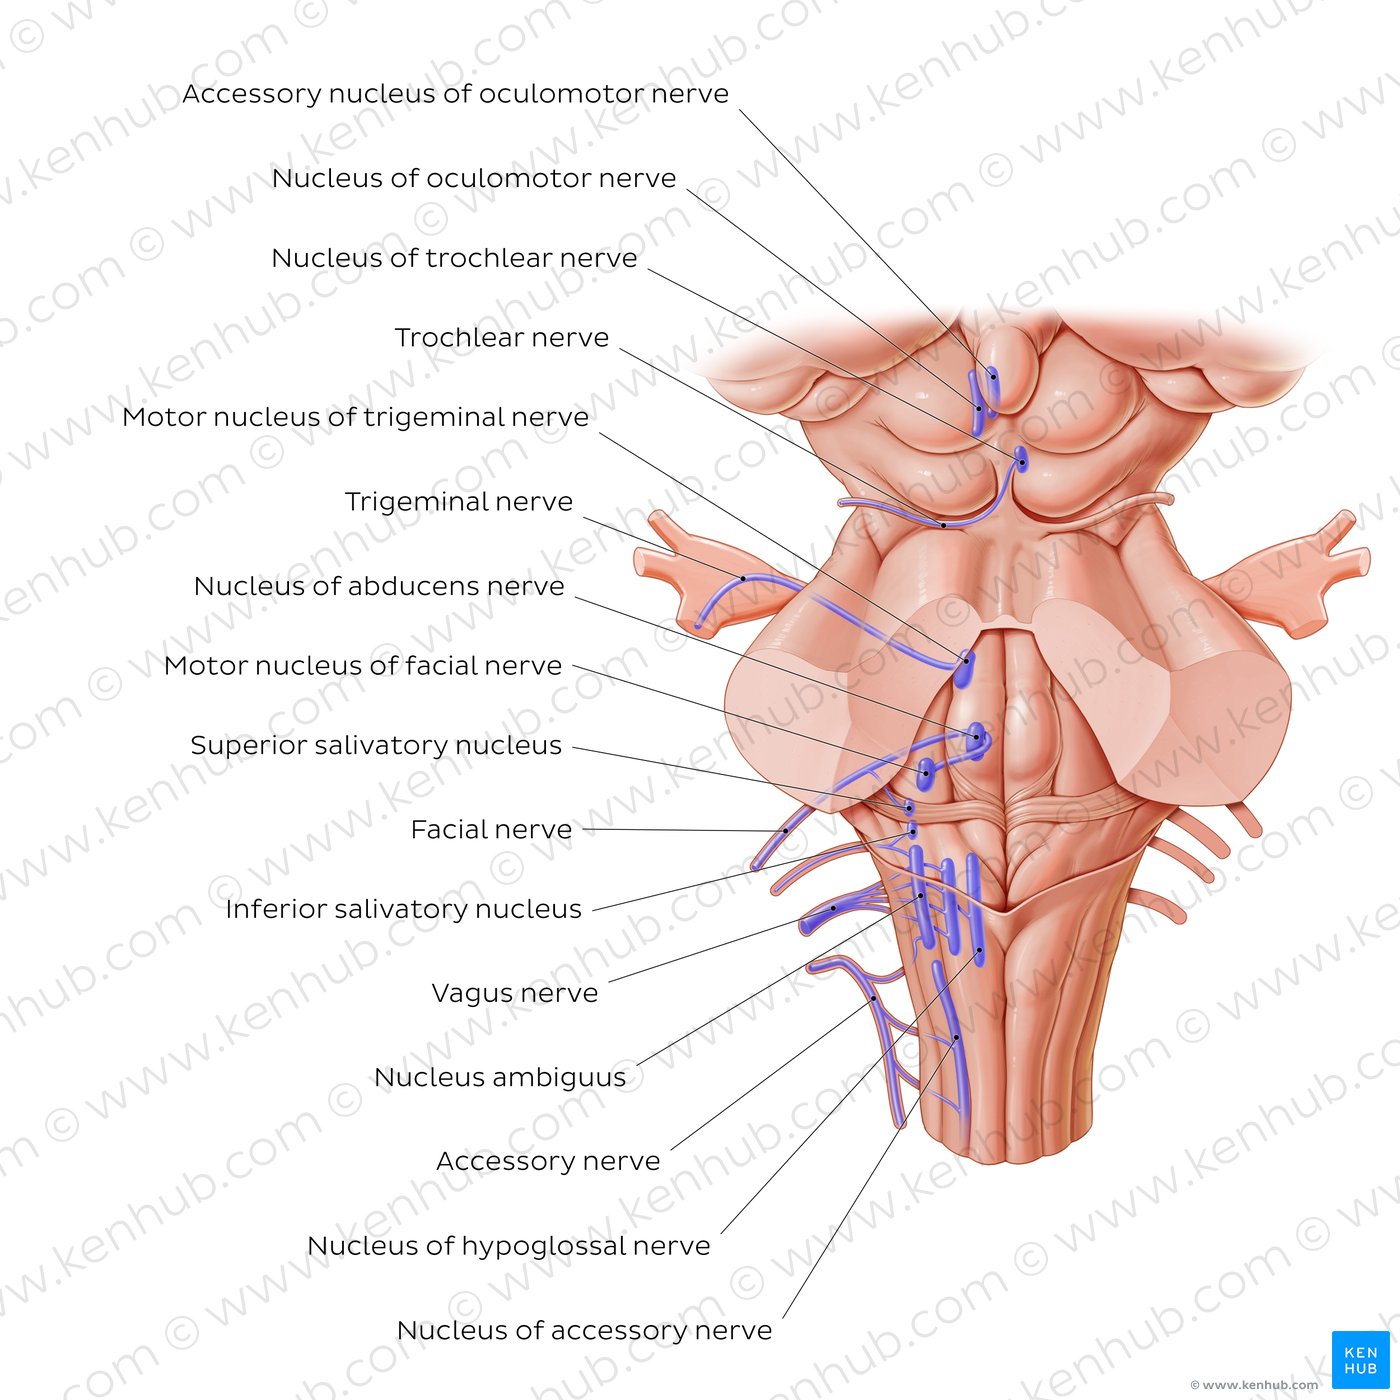 Motor (efferent) cranial nerve nuclei